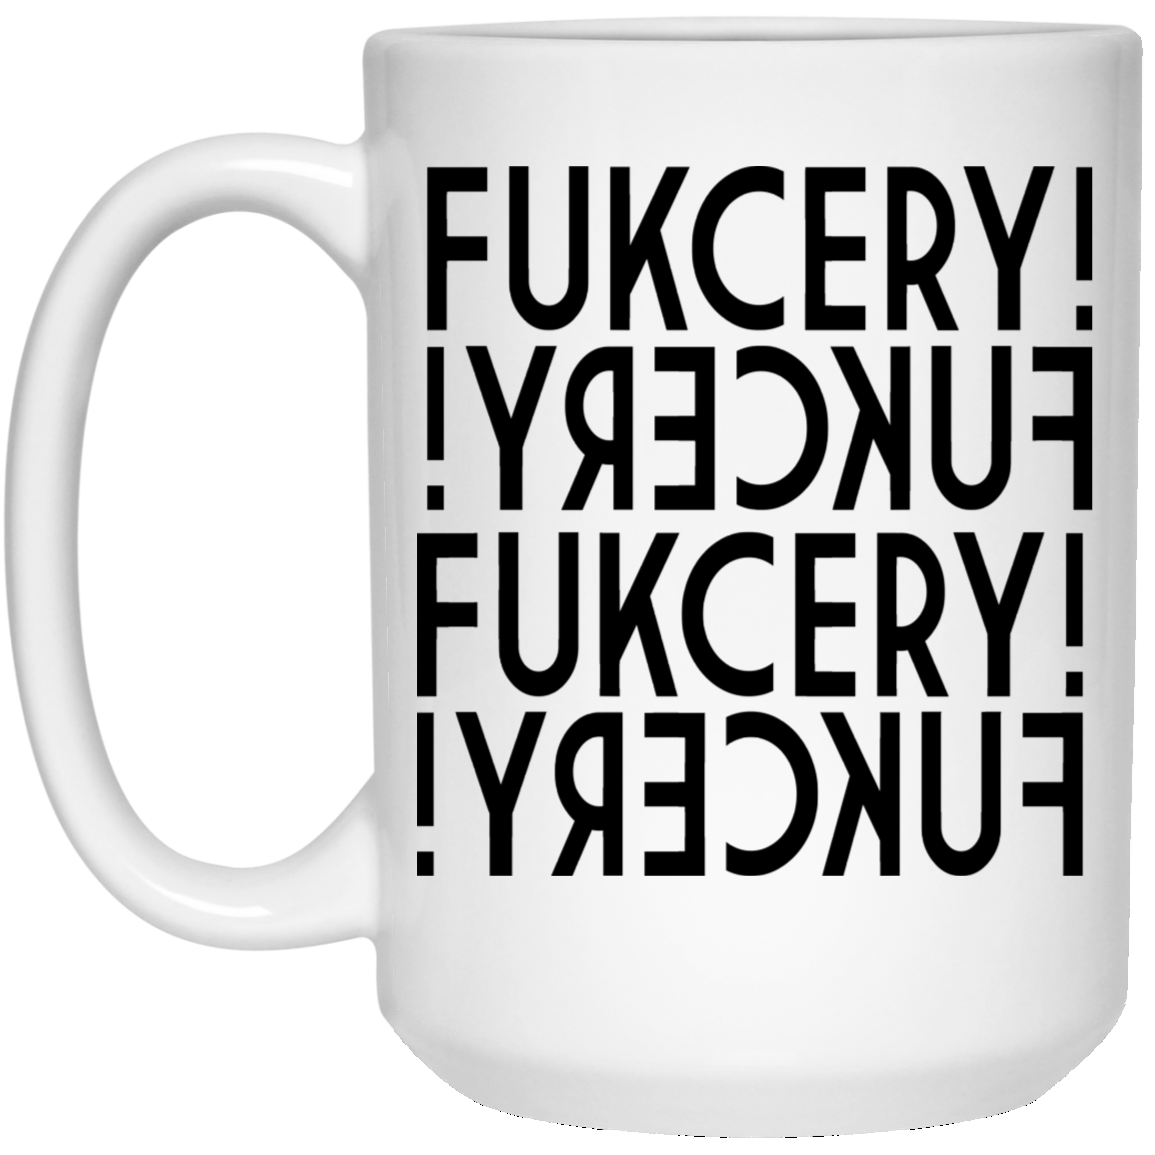 ArtichokeUSA Custom Design #22. Fuckery! The New BullShit. Humor. 15 oz. White Mug